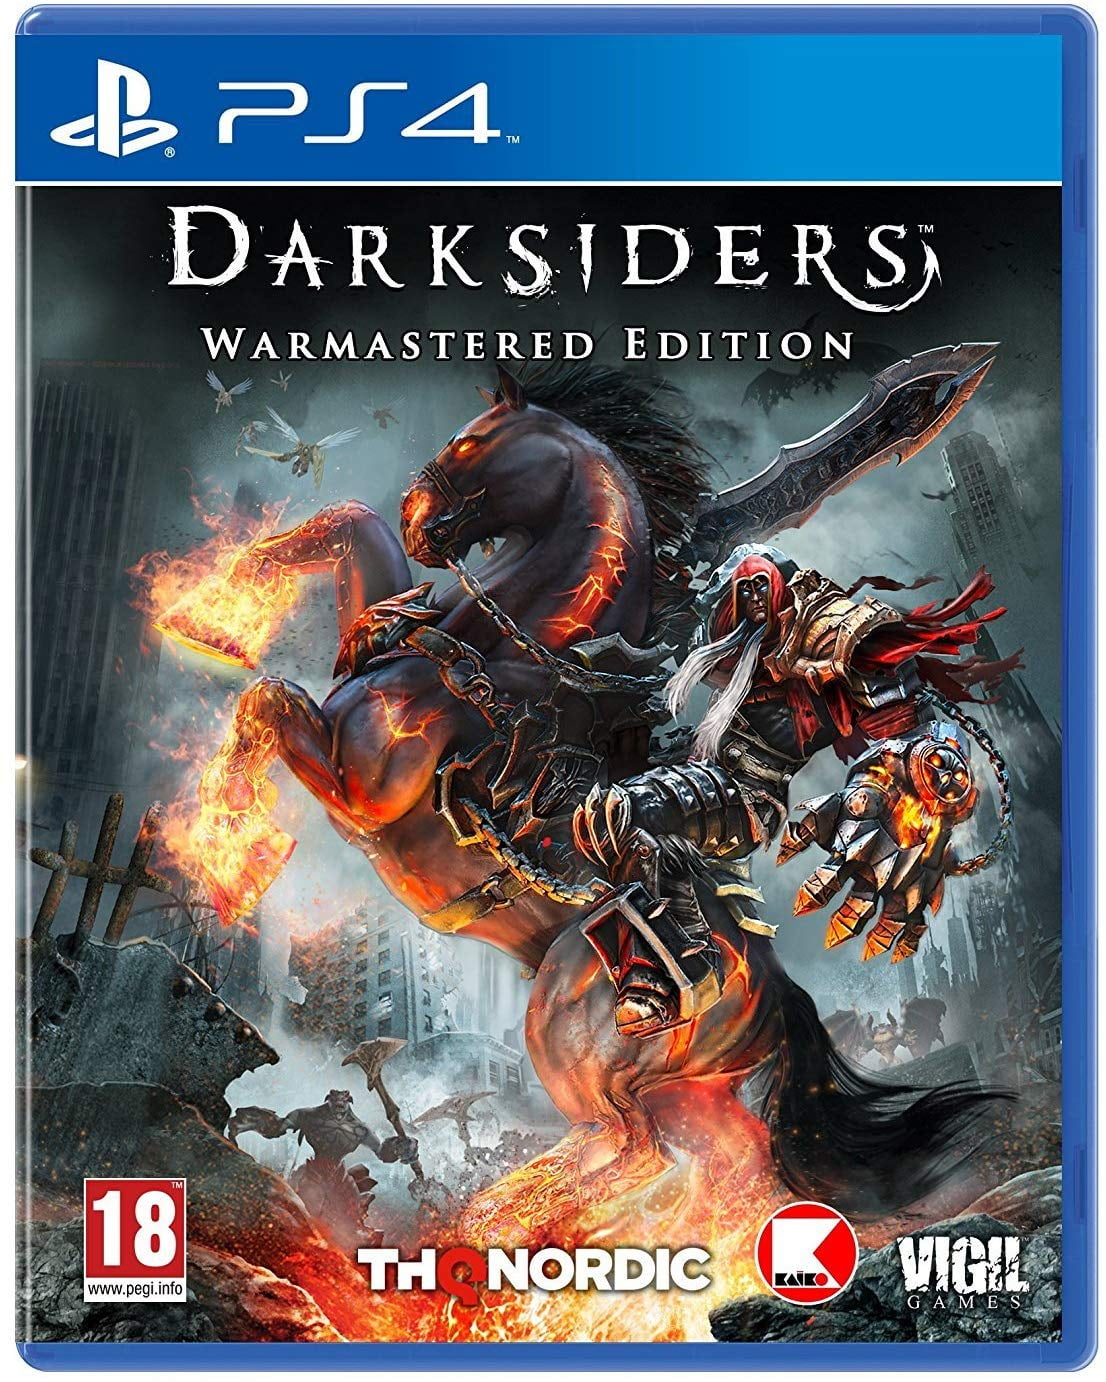 Darksiders Edition, Marketplace Brands, PlayStation 4 - Walmart.com